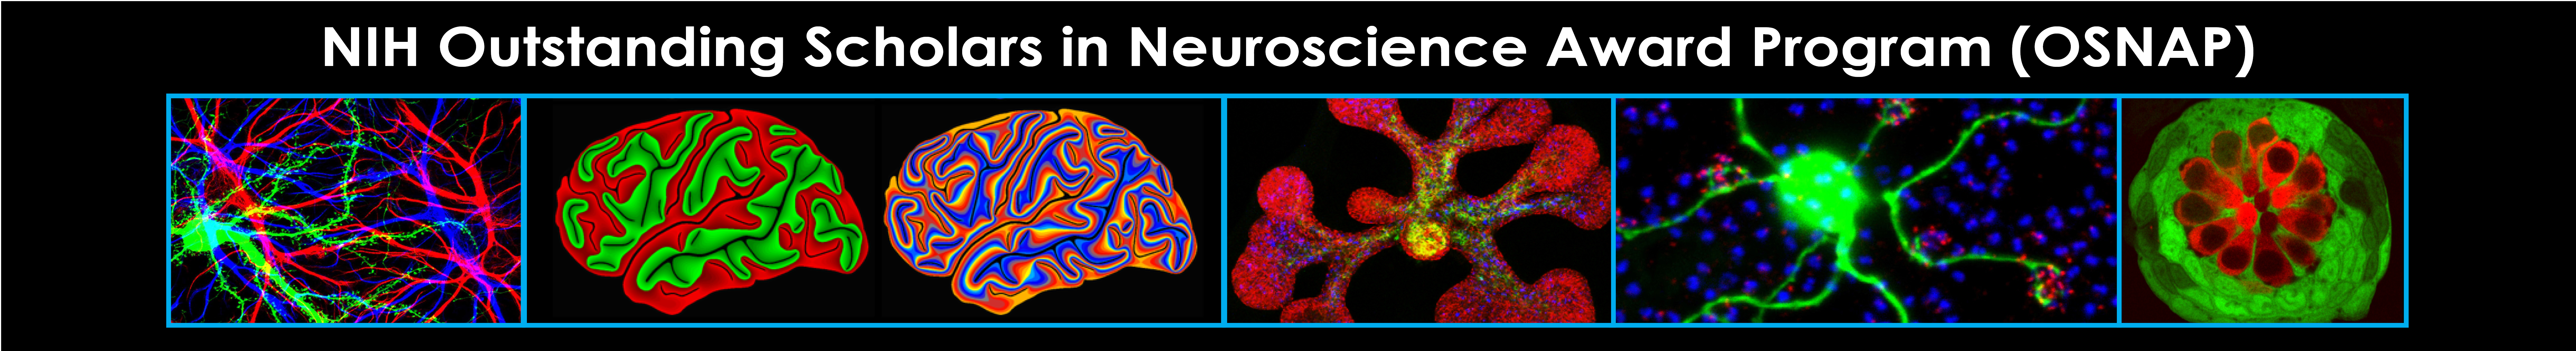 NIH Outstanding Scholars in Neuroscience Award program (OSNAP)